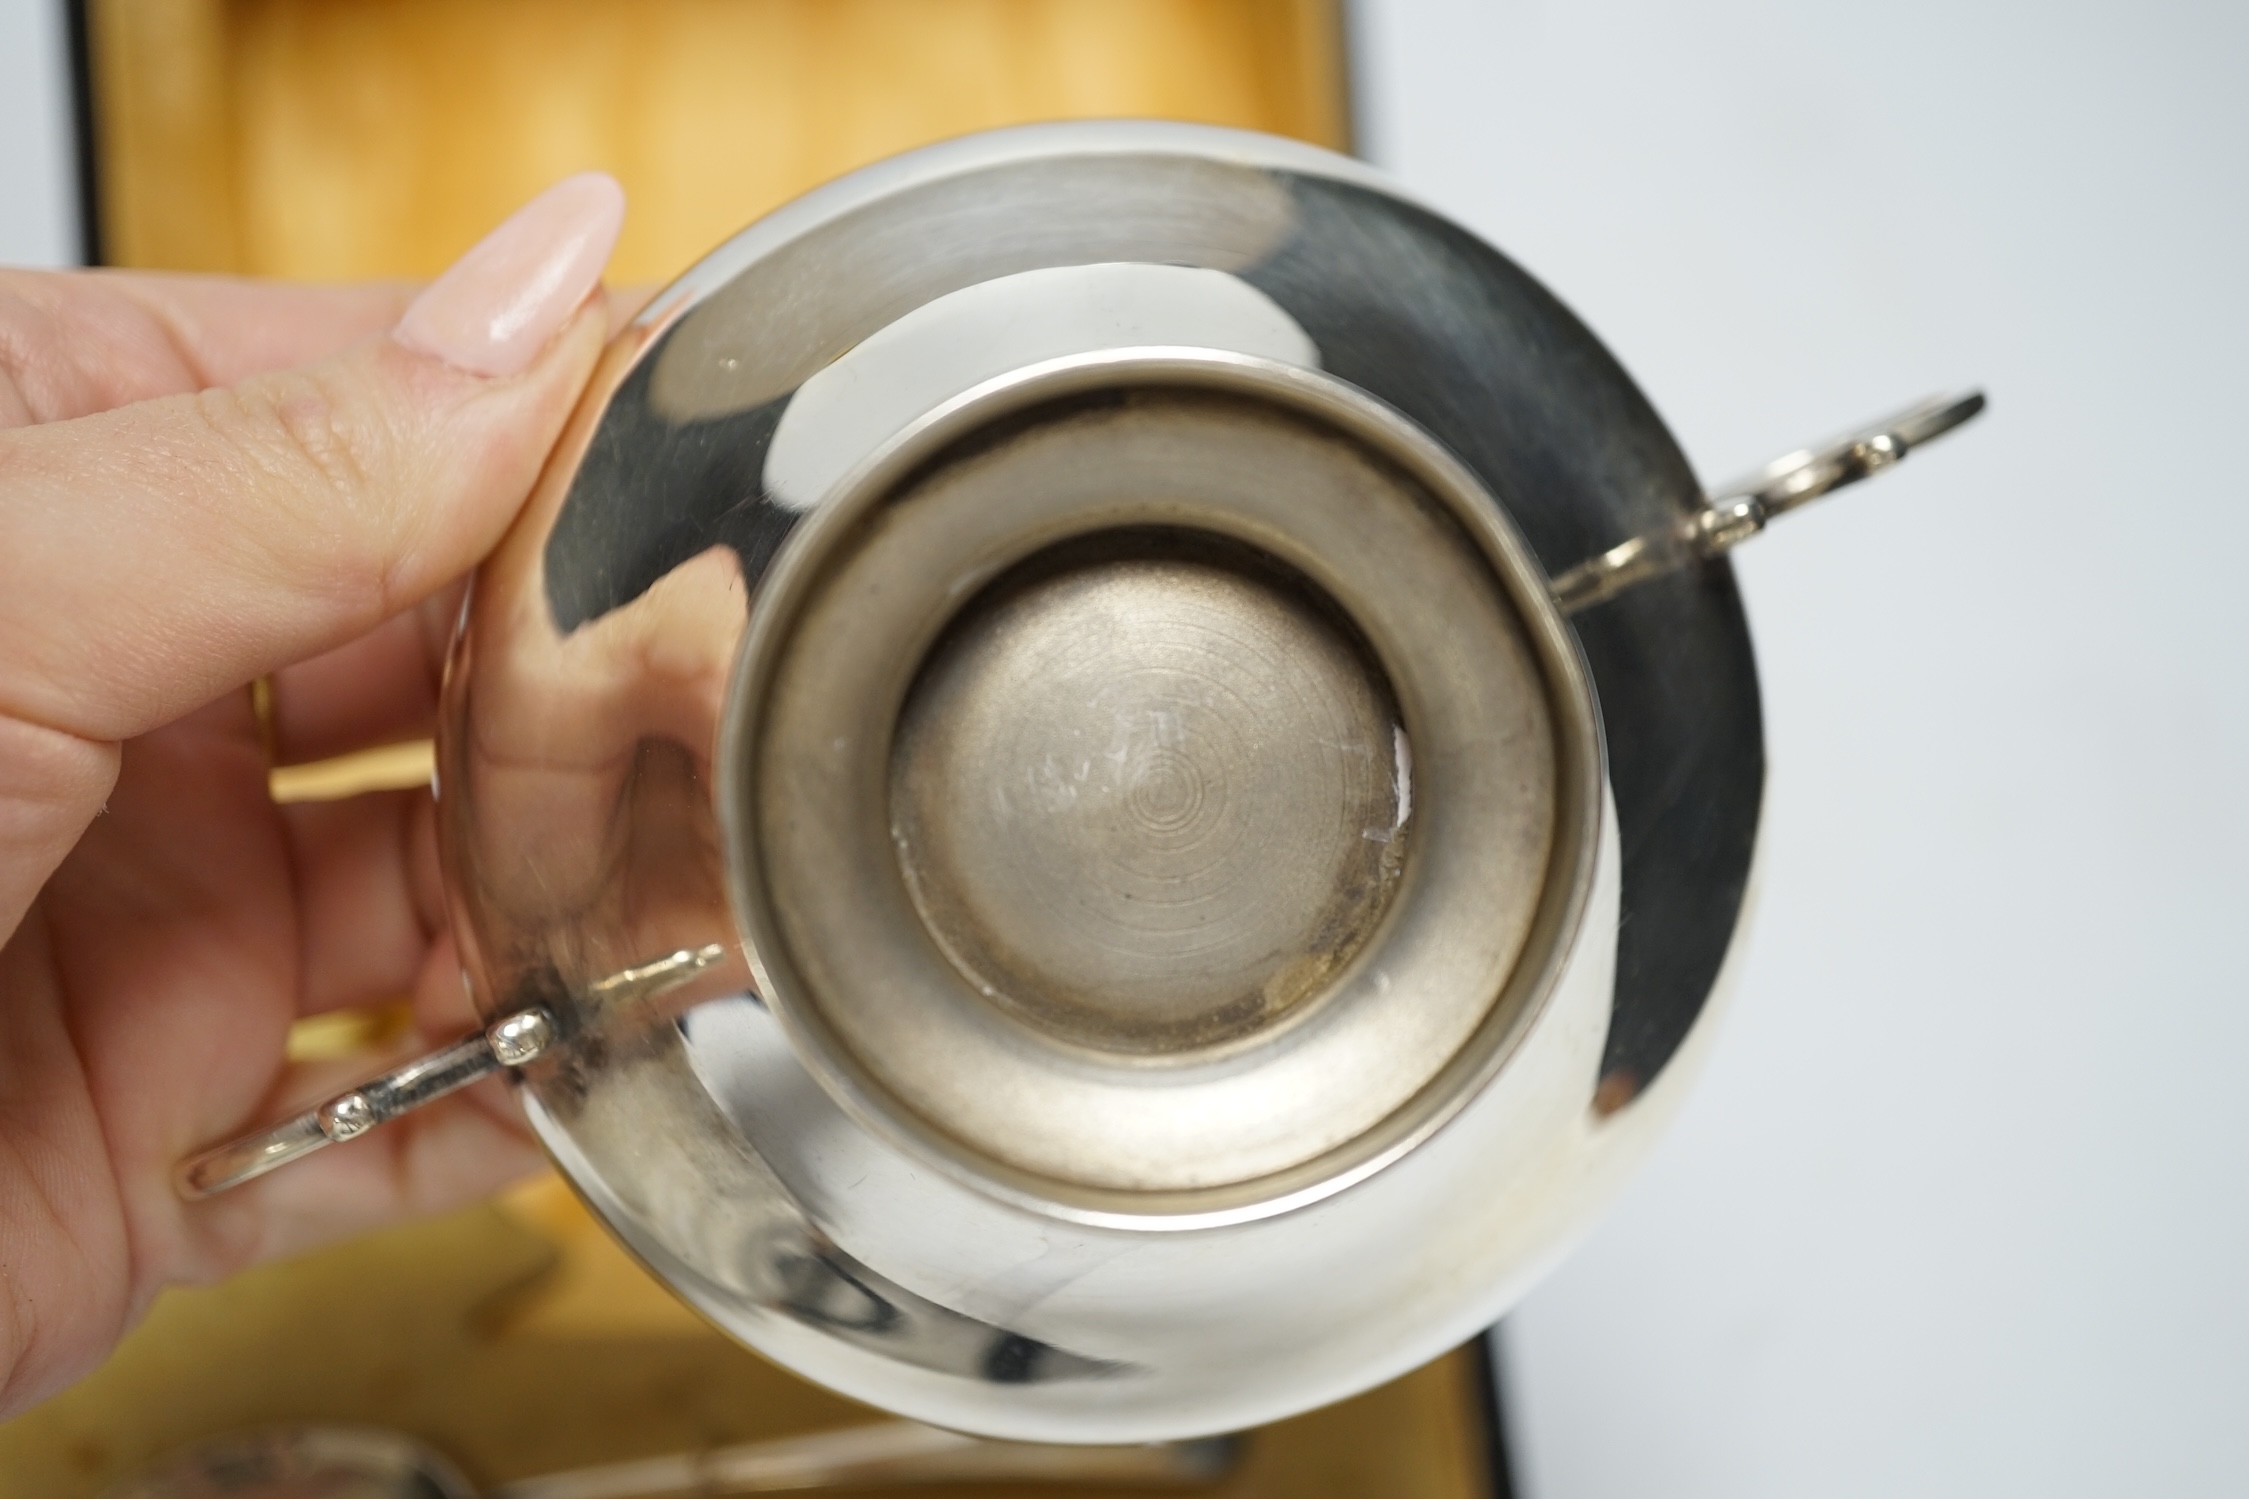 A George V cased silver christening bowl and spoon, Joseph Gloster Ltd, Birmingham, 1928/29, bowl diameter 92mm.